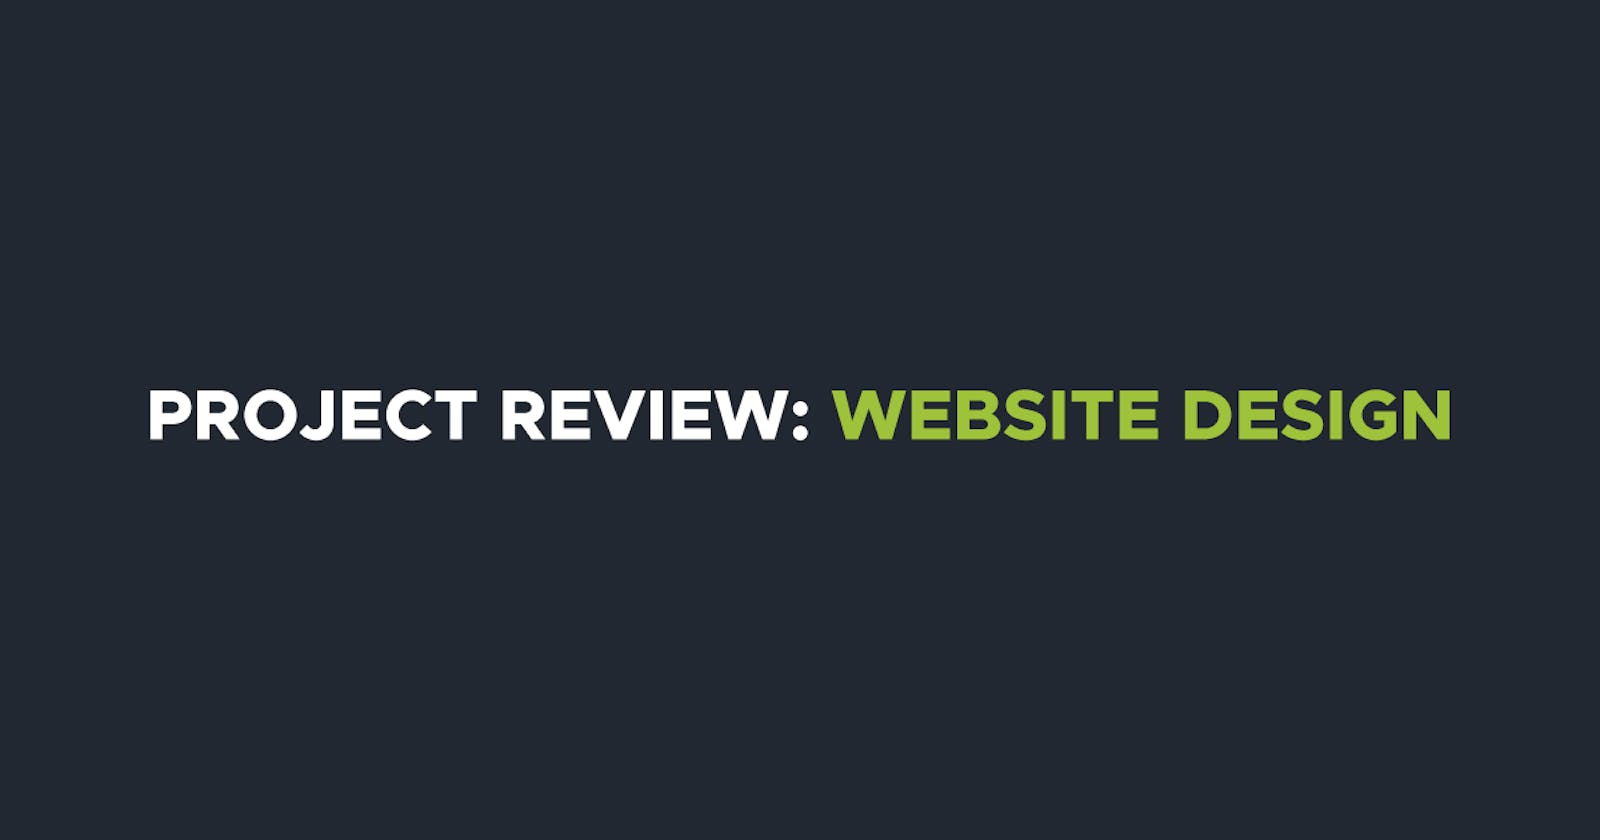 Project Review: Website Design